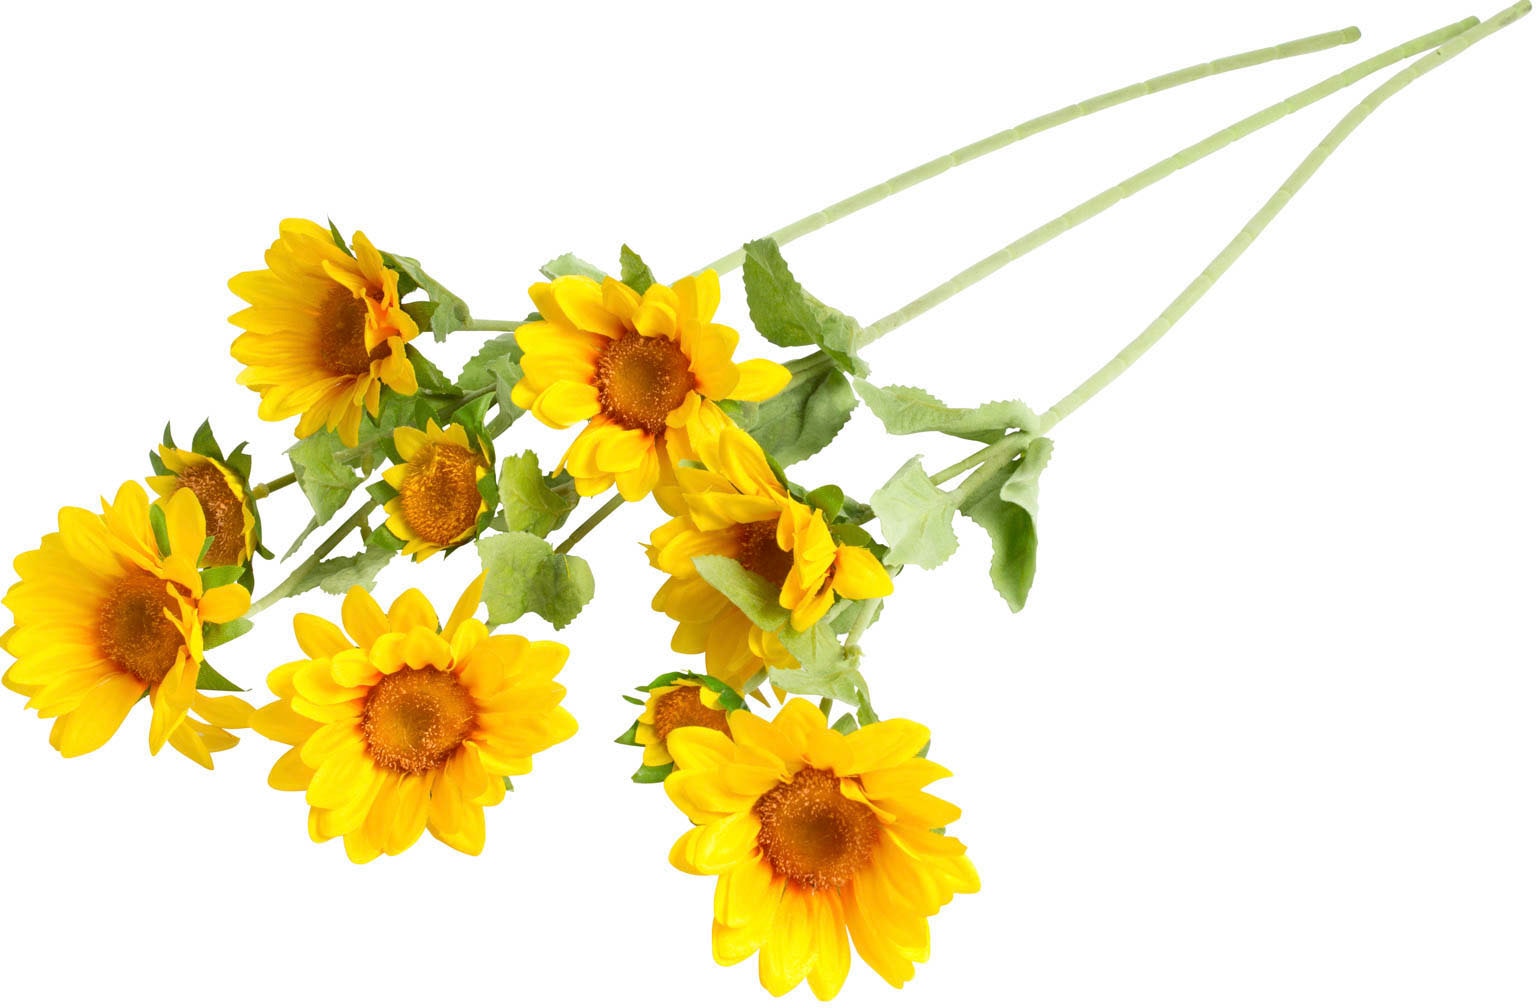 Botanic-Haus Kunstblume »Sonnenblume mit 2 Stielen«